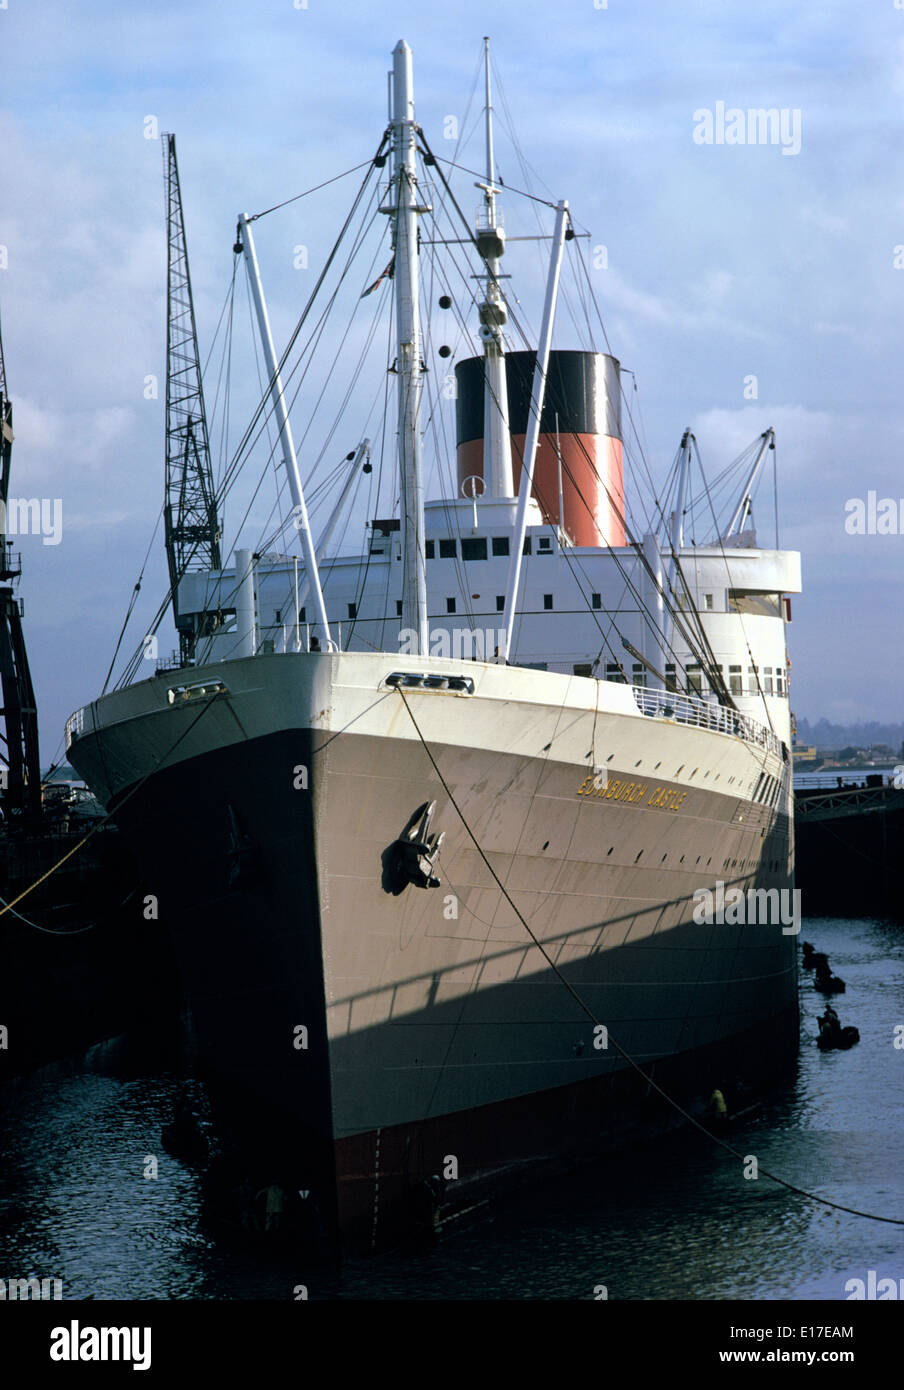 NOV 1973. SOUTHAMPTON, ENGLAND - DRY DOCKING FOR CAPE MAIL SHIP - UNION CASTLE LINER EDINBURGH CASTLE IN KGV DRY DOCK. Stock Photo